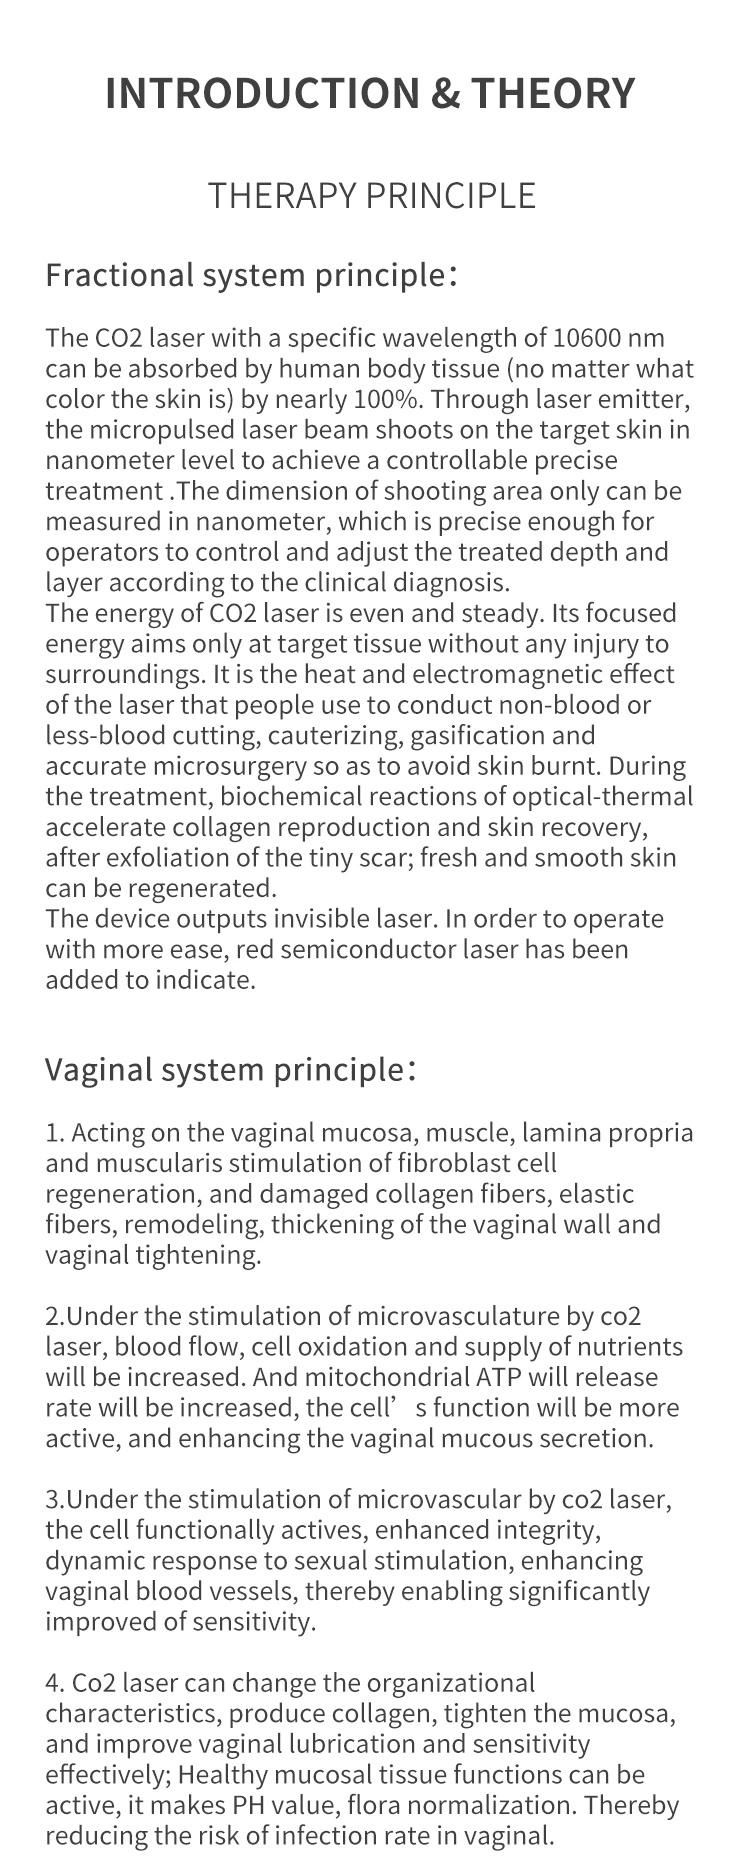 CO2 Fractional Laser Tighten Vagina Beautify Vagina Medical Beauty Equipment